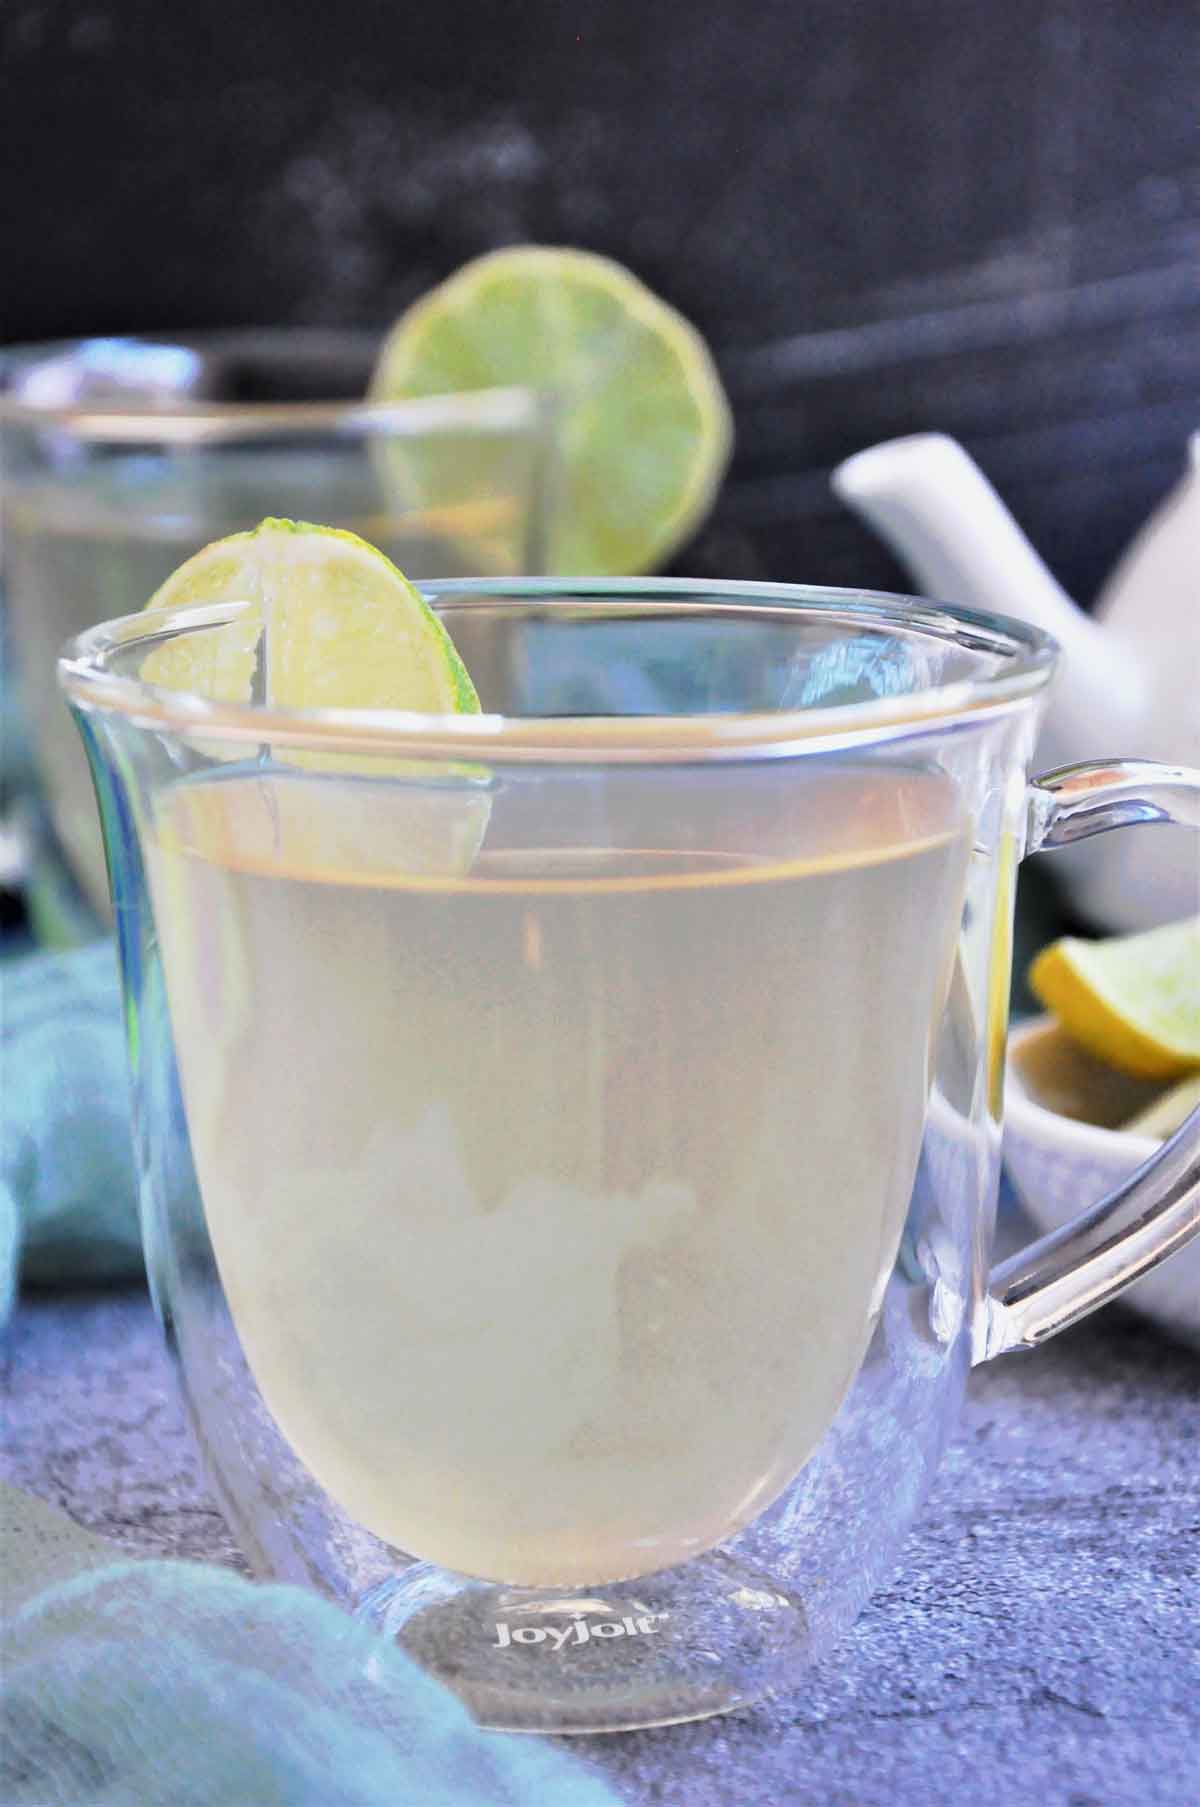 Lemonrass tea in a cup.